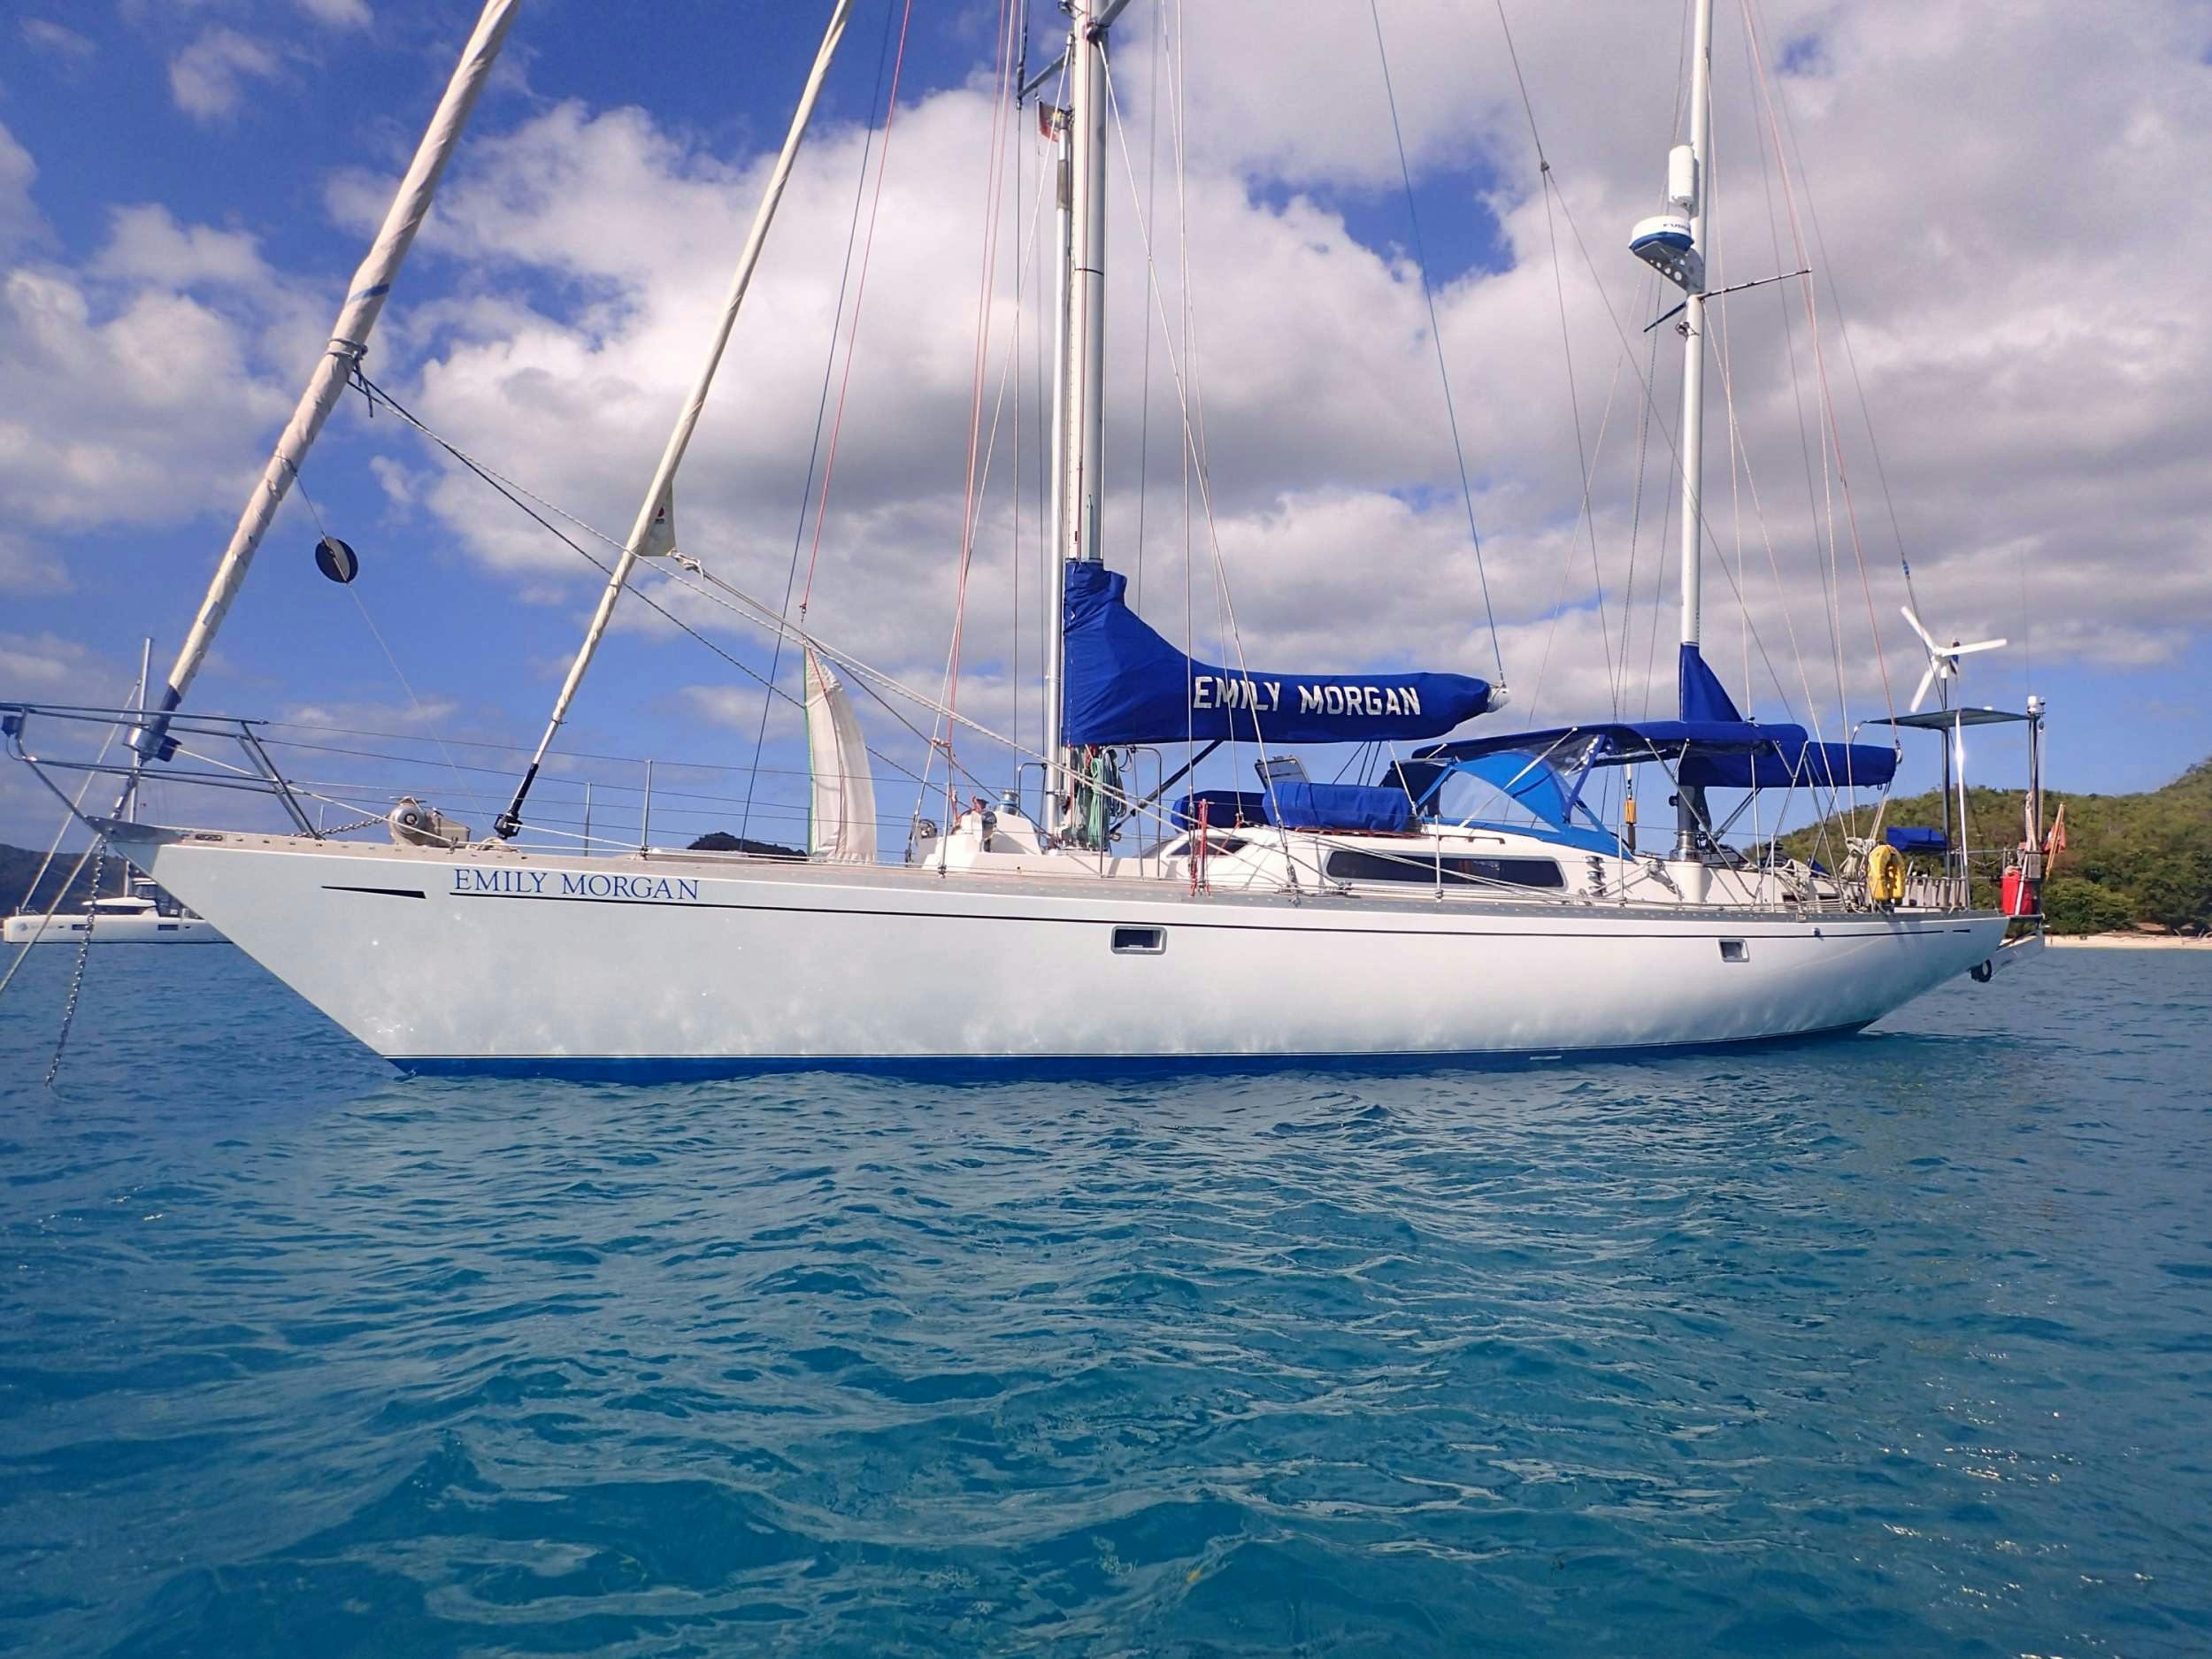 emily morgan - Yacht Charter Denmark & Boat hire in Northern EU, Caribbean 1